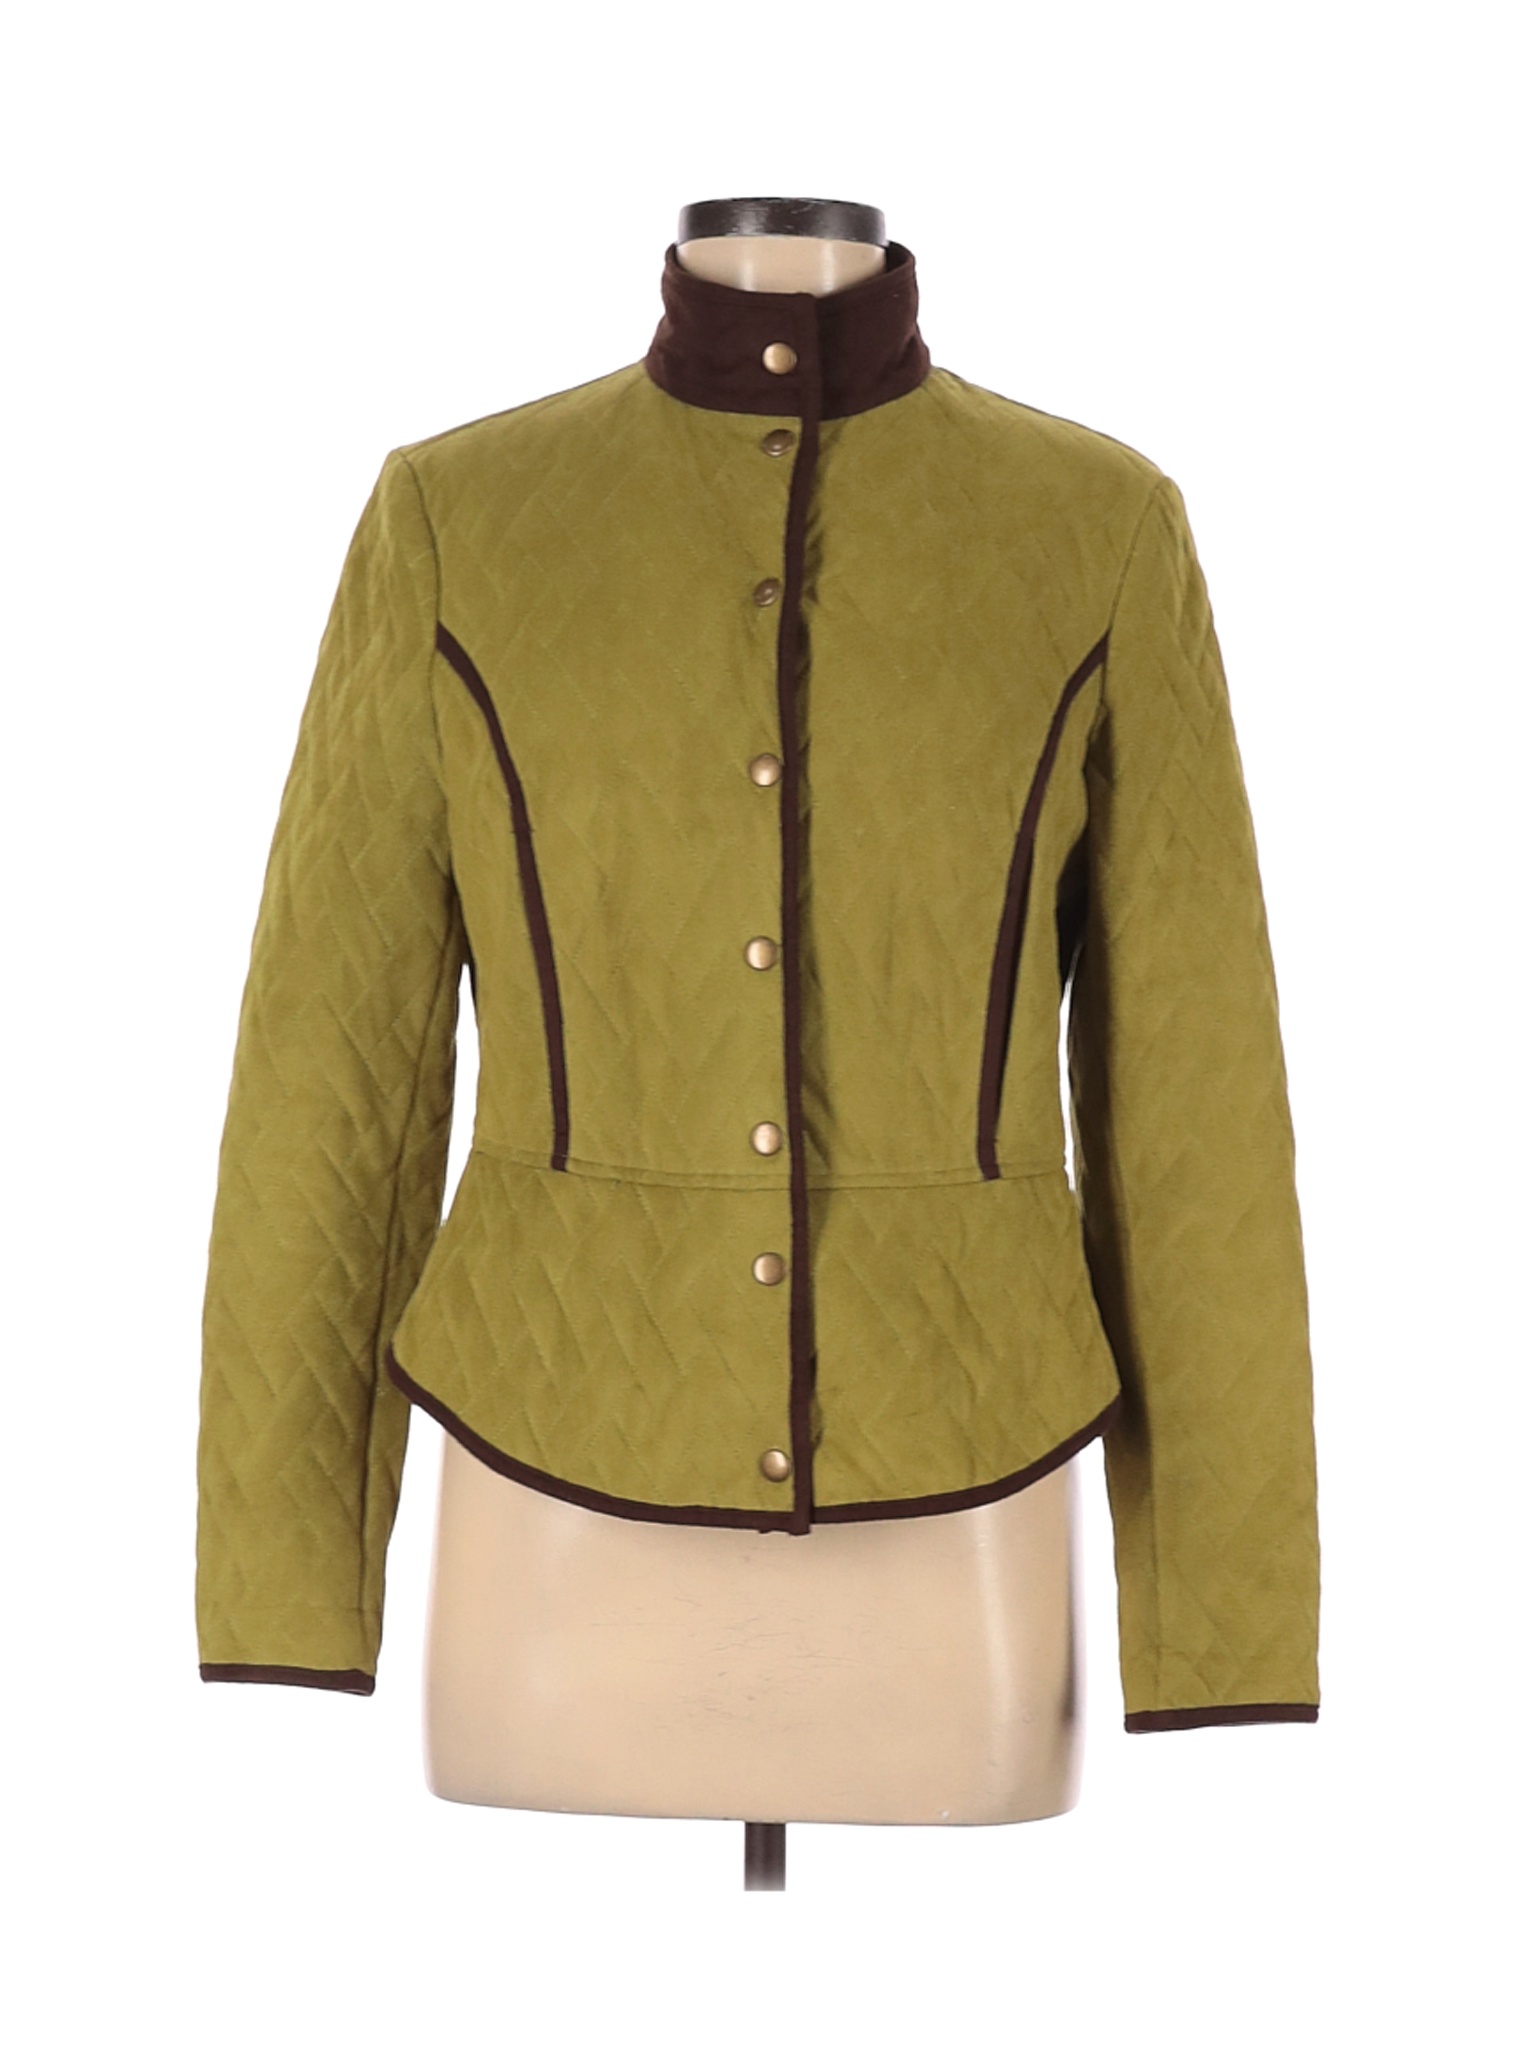 Tasha Polizzi Collection Women Green Jacket M | eBay